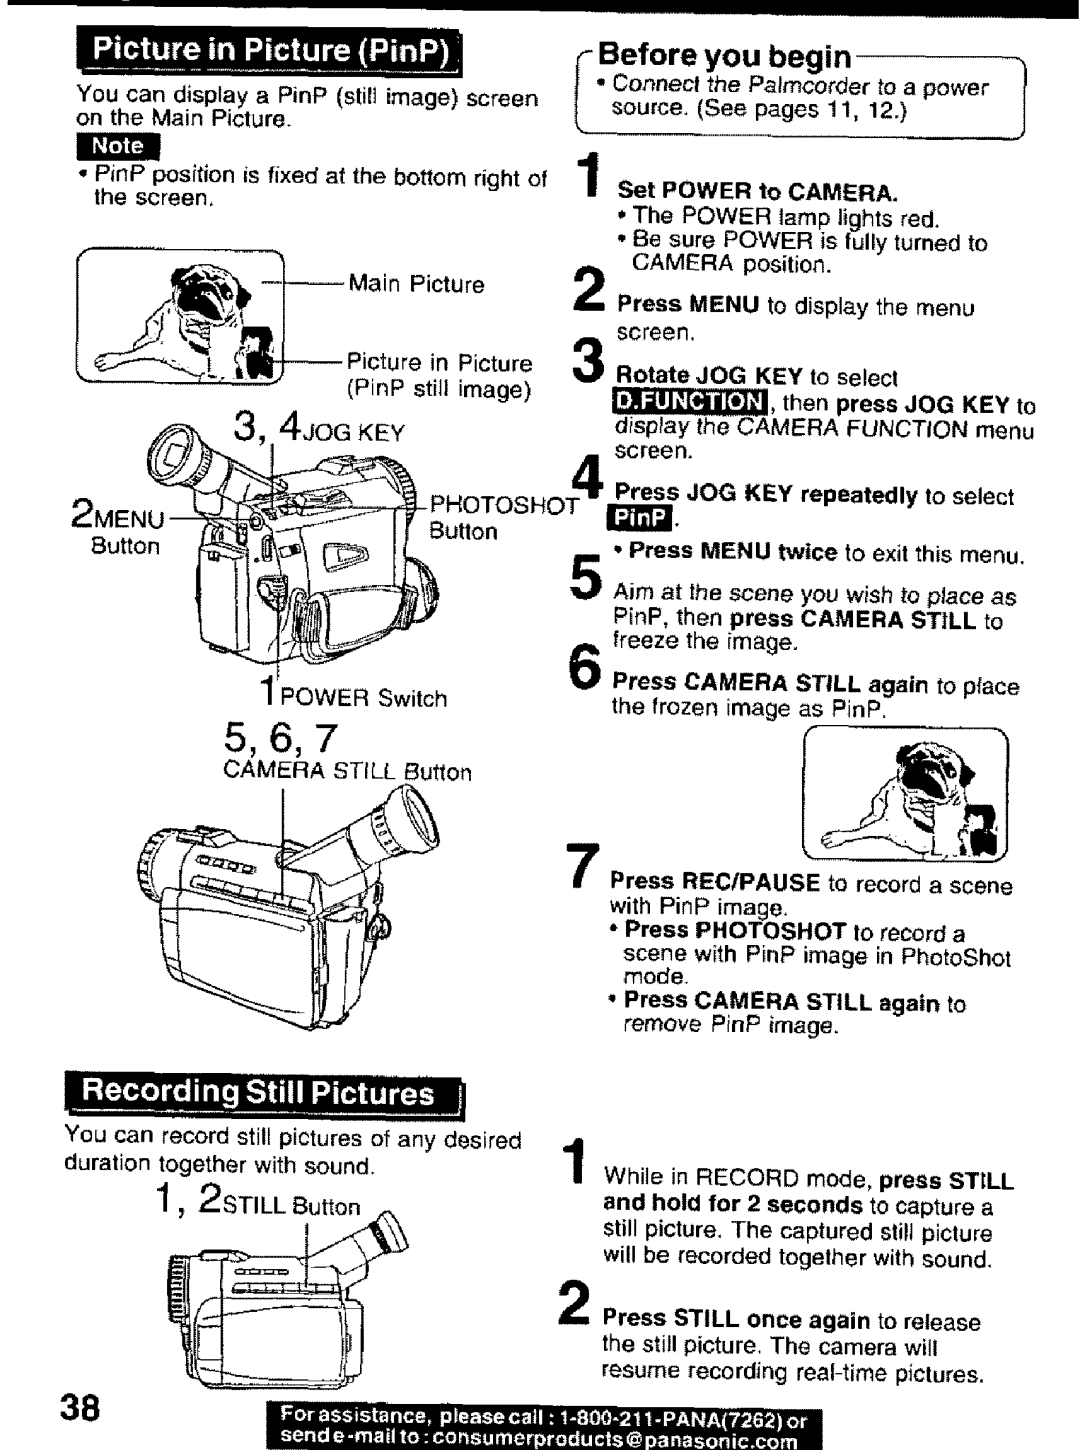 Panasonic PV-DV101 manual 5,6,7, f Before, begin, 4JOG KEY, Button 